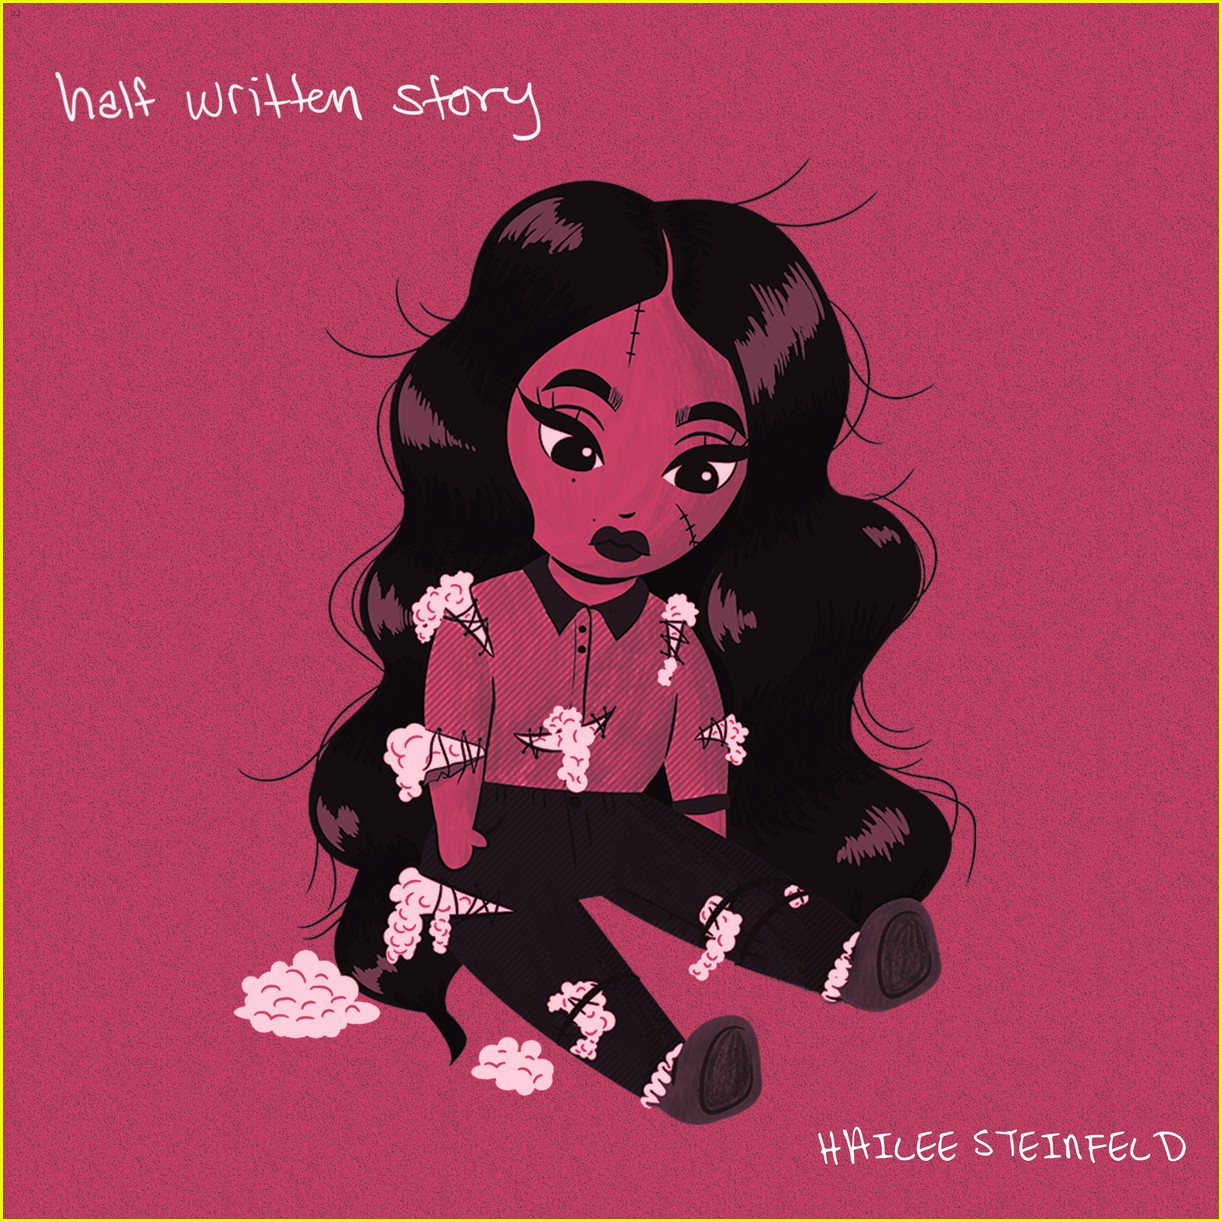 hailee steinfeld album half written story post 02